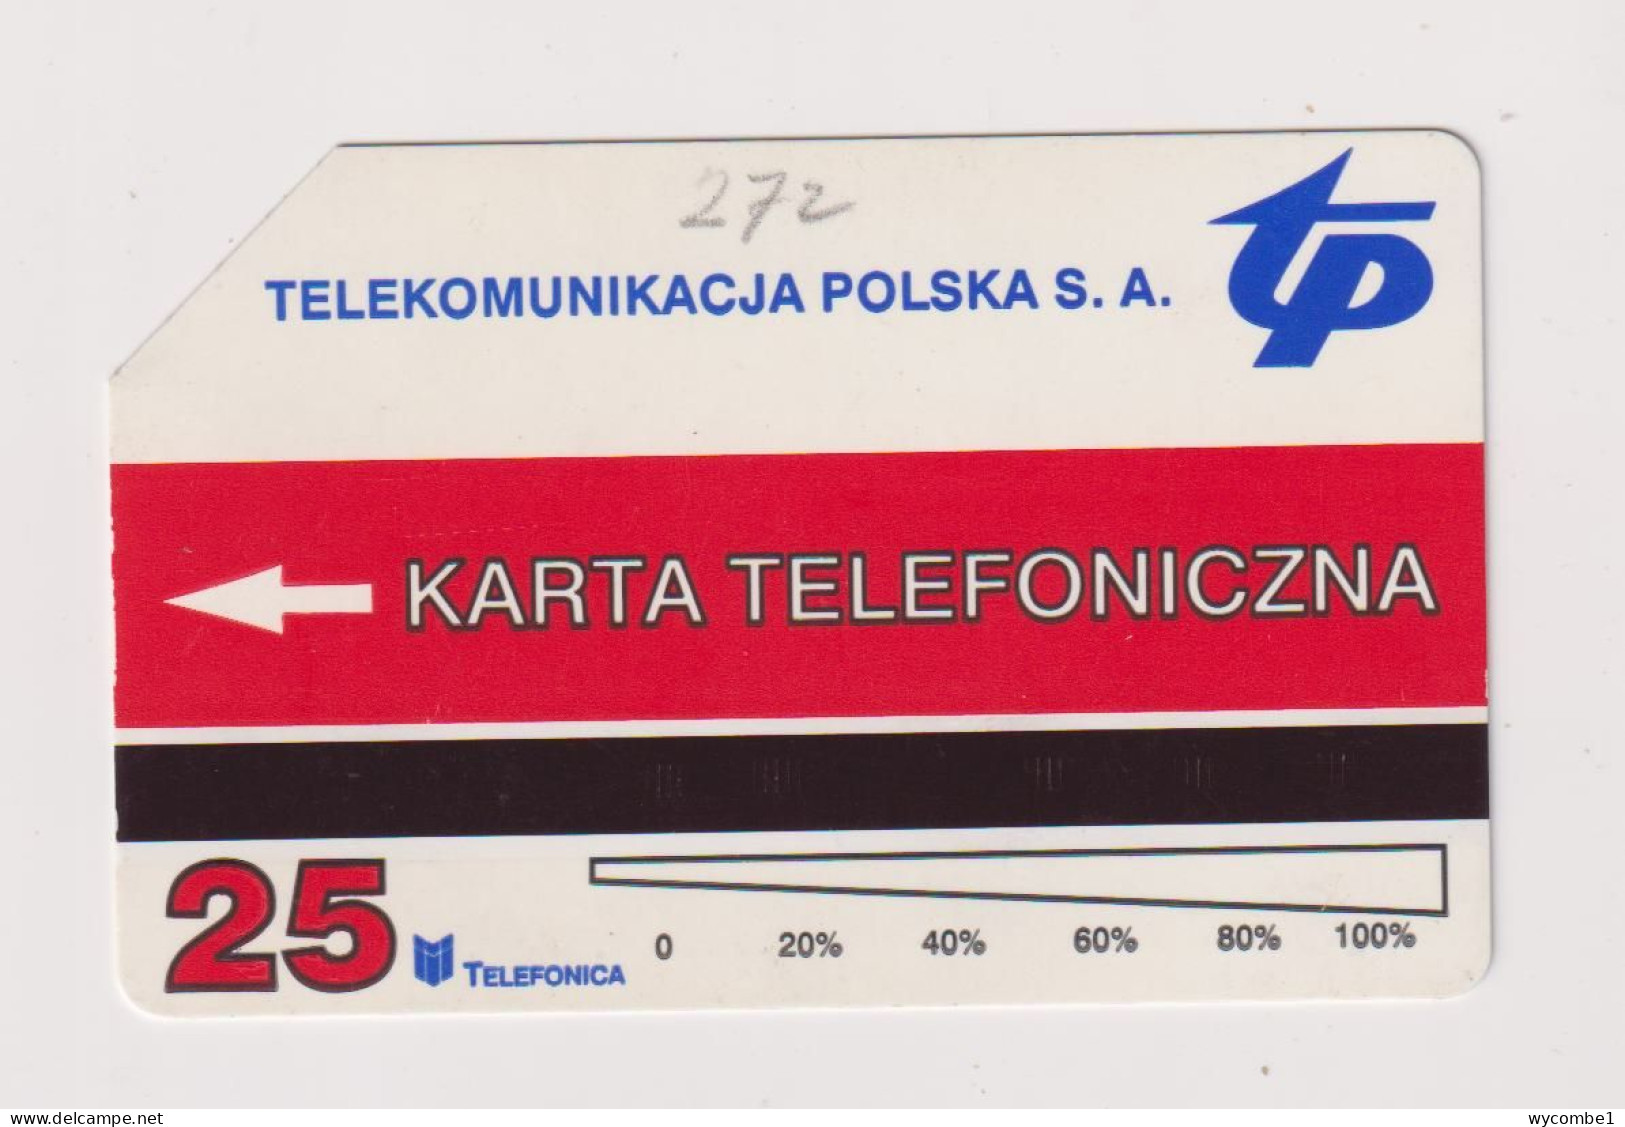 POLAND -  1997 Wrestling Championships Urmet  Phonecard - Poland